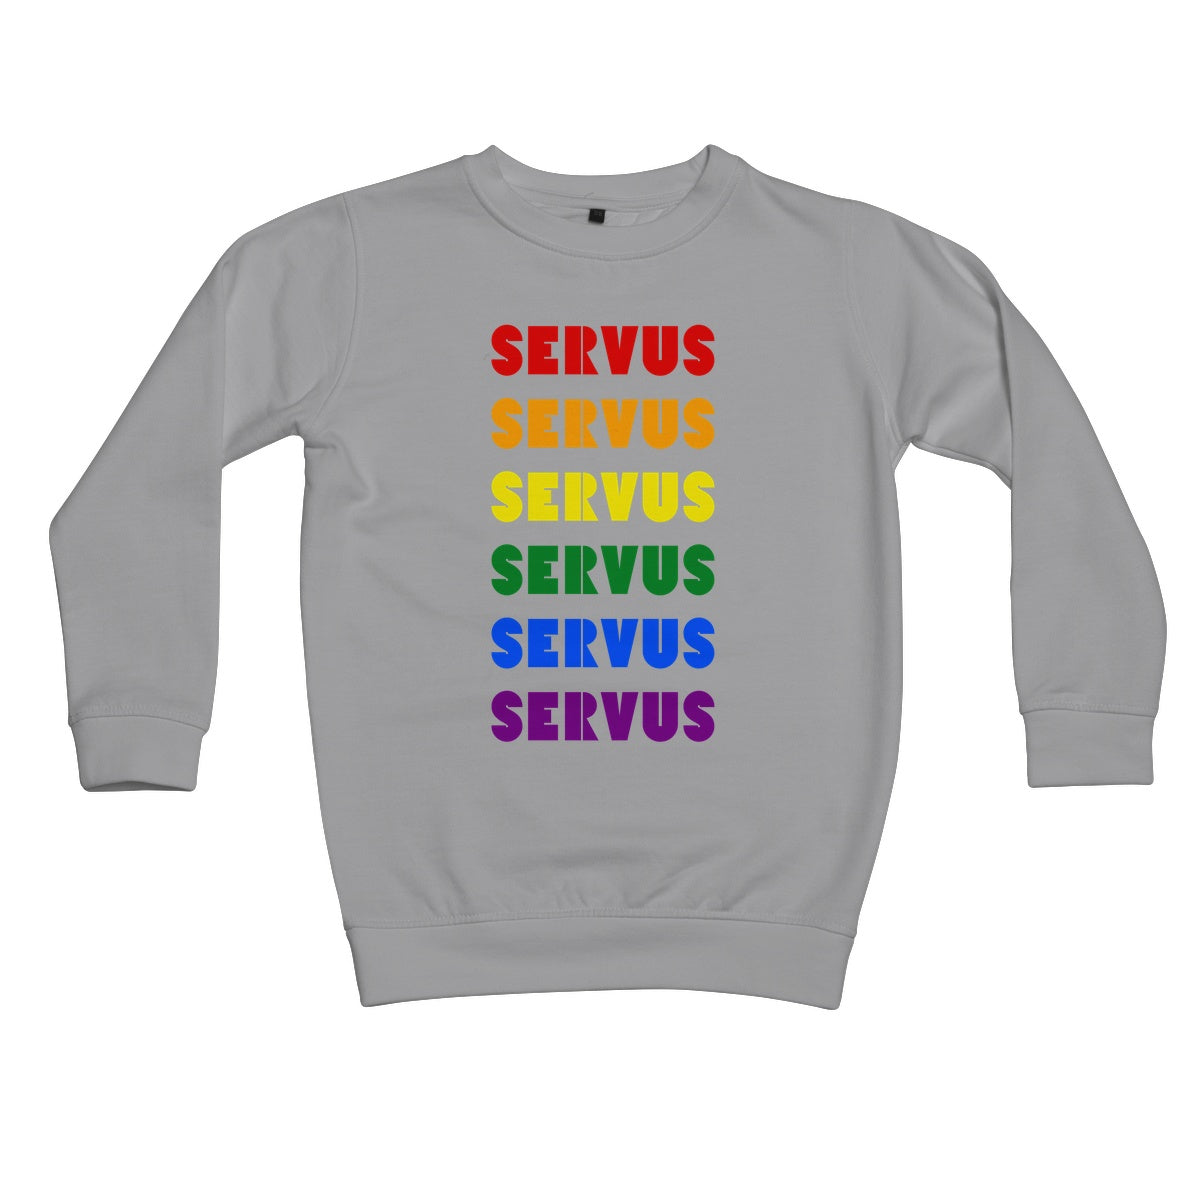 Kid's Bavarian Graphic Sweatshirt "Servus" Rainbow print - 7 colours - Bavari Shop - Bavarian Outfits, Dirndl, Lederhosen & Accessories